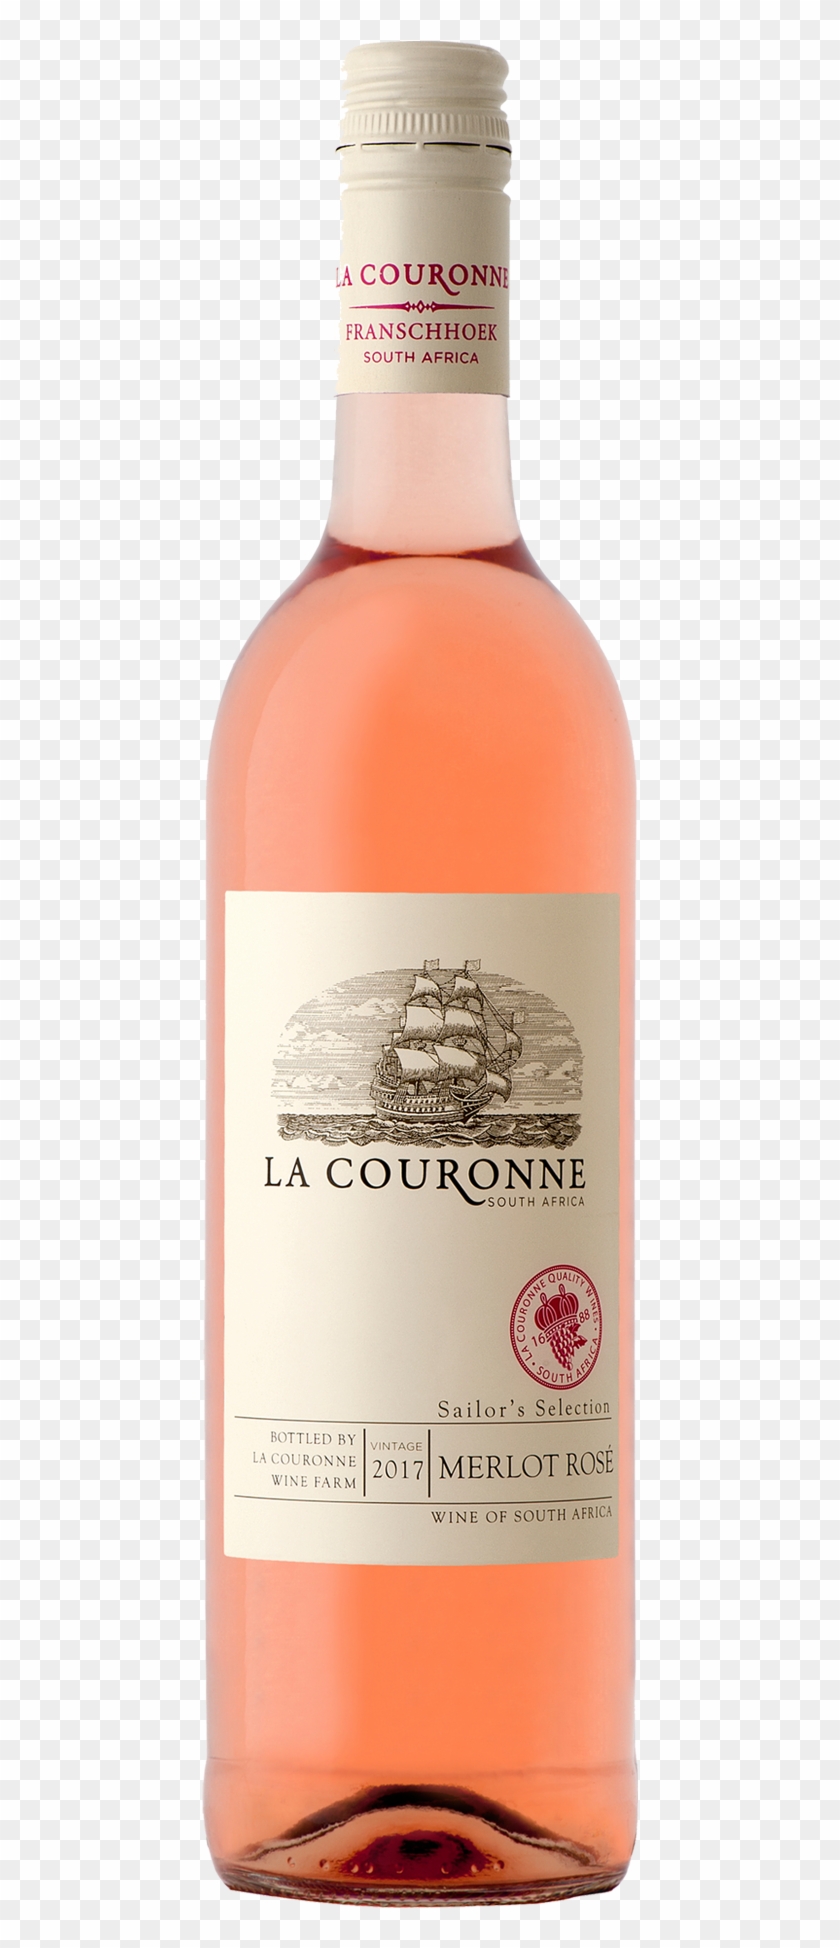 Merlot Rosé - Glass Bottle Clipart #4990662